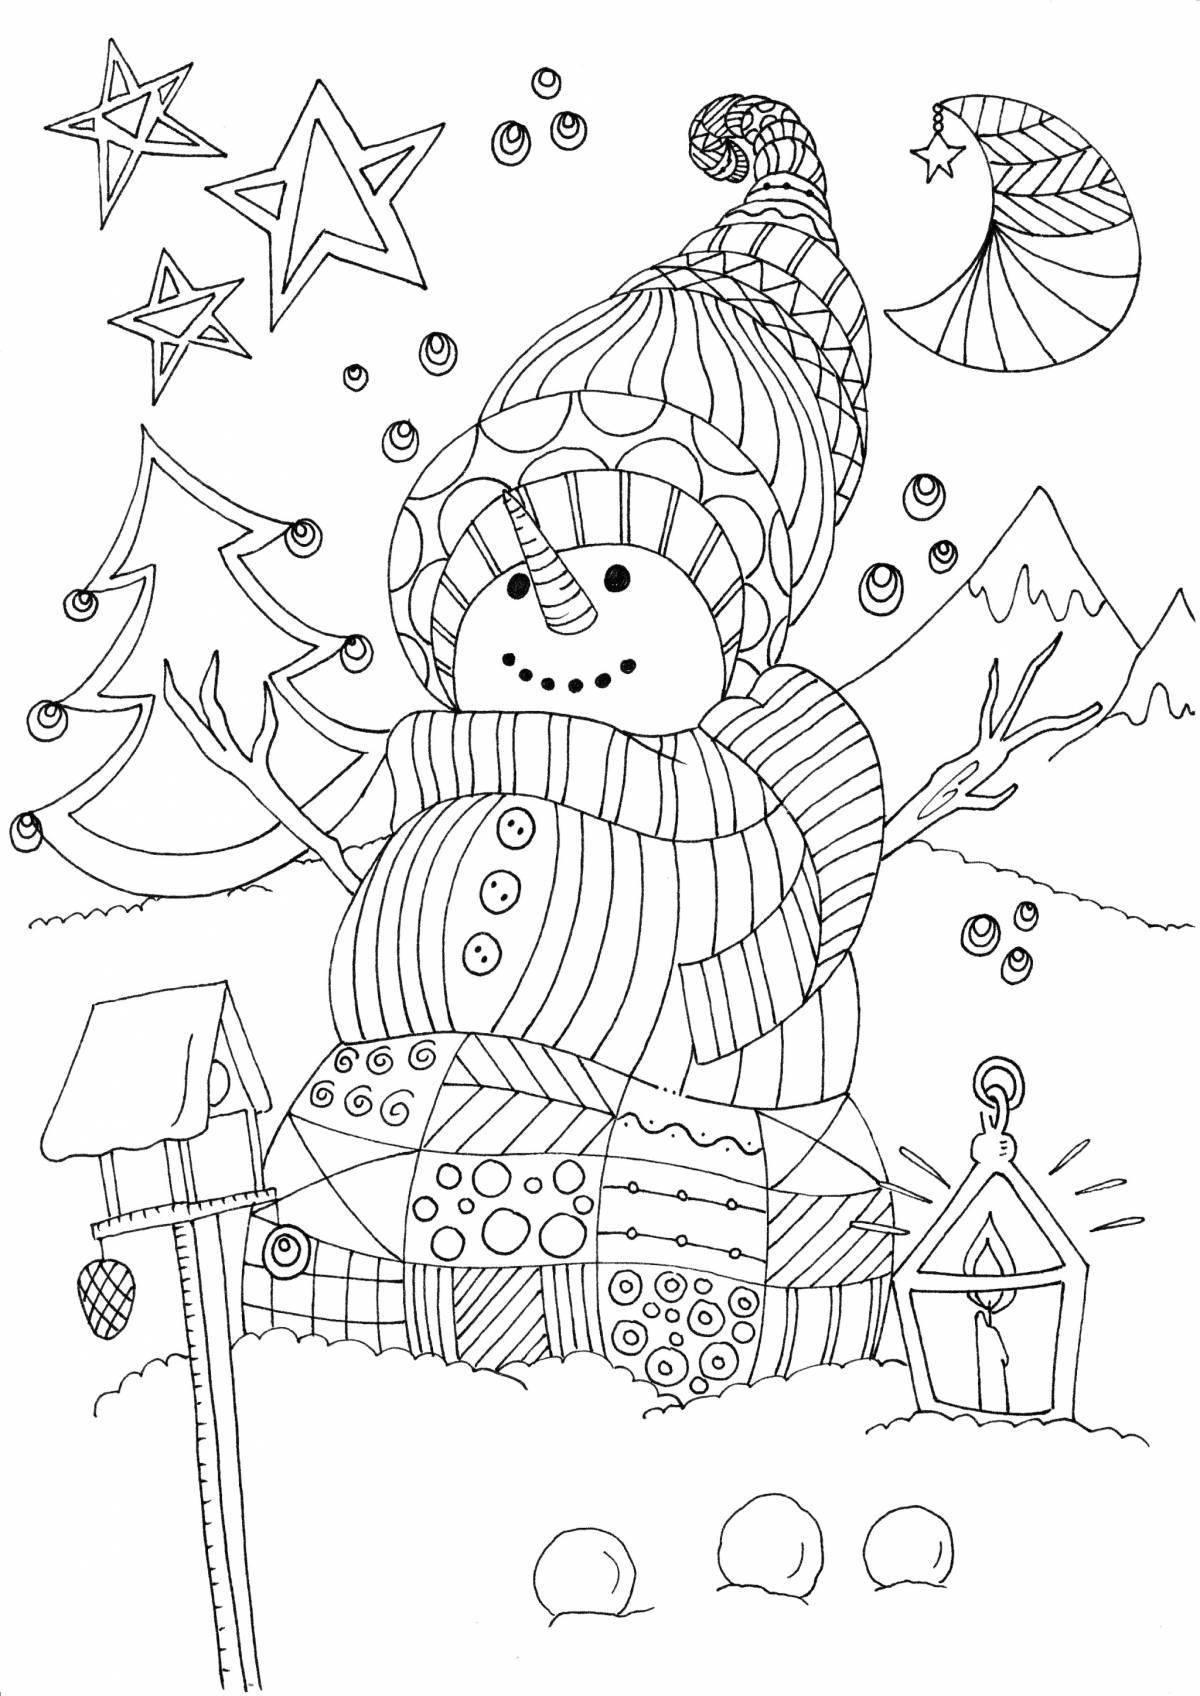 Joyful winter anti-stress coloring book for kids